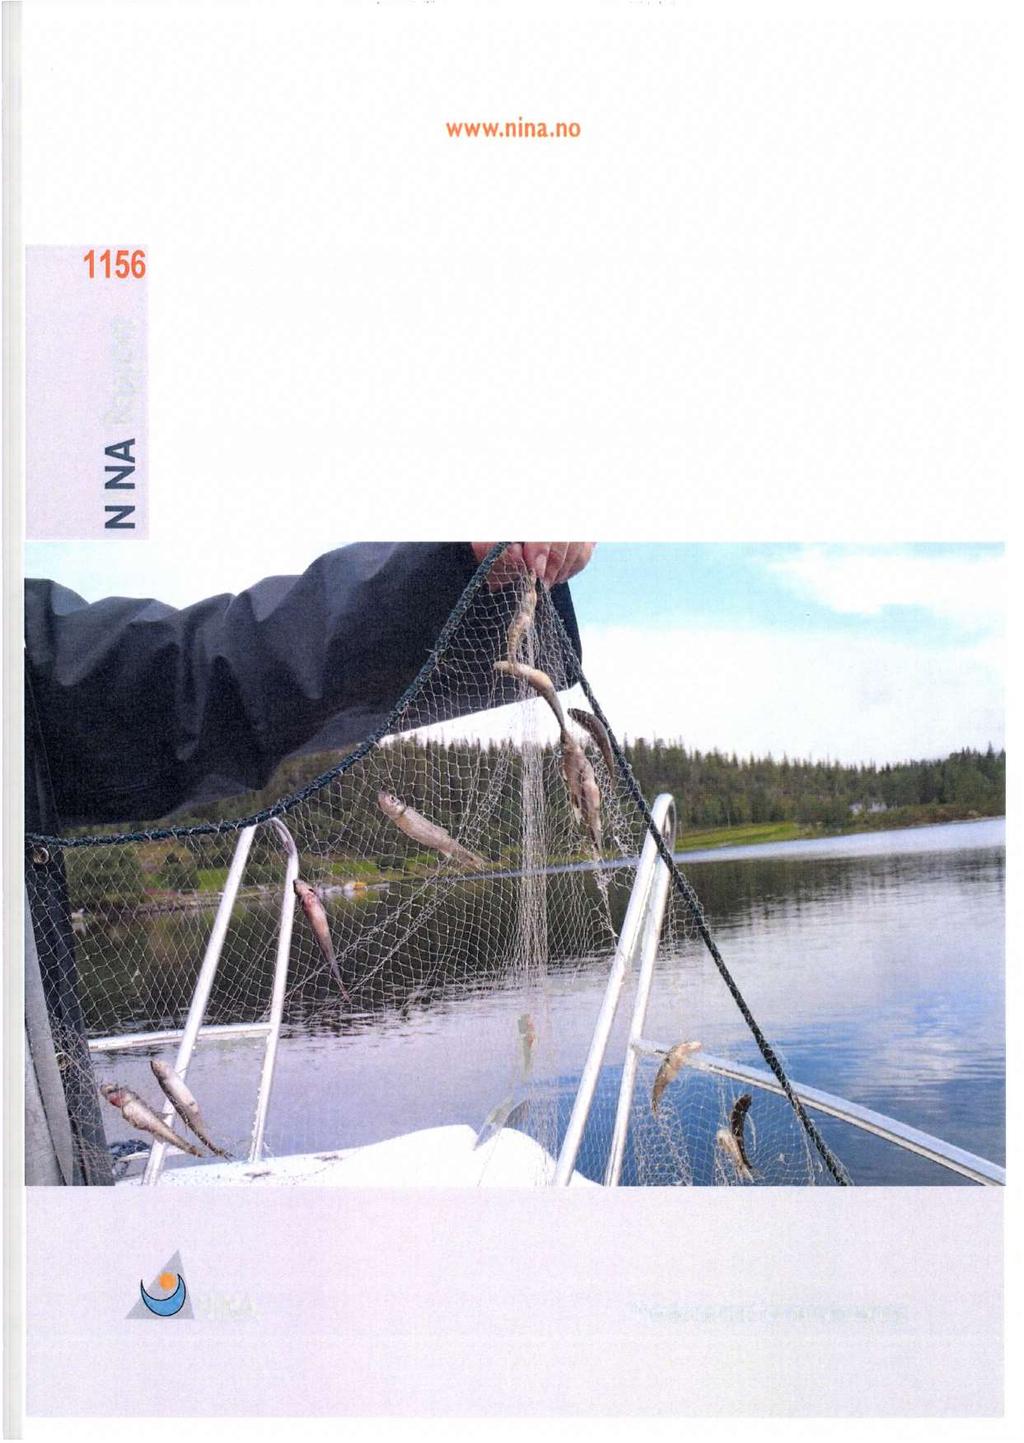 NINA R Fiskebiologiske undersøkelser i Tunnsjøen og Tunnsjøflyan, 2014 Odd Terje Sandlund, Tor G.